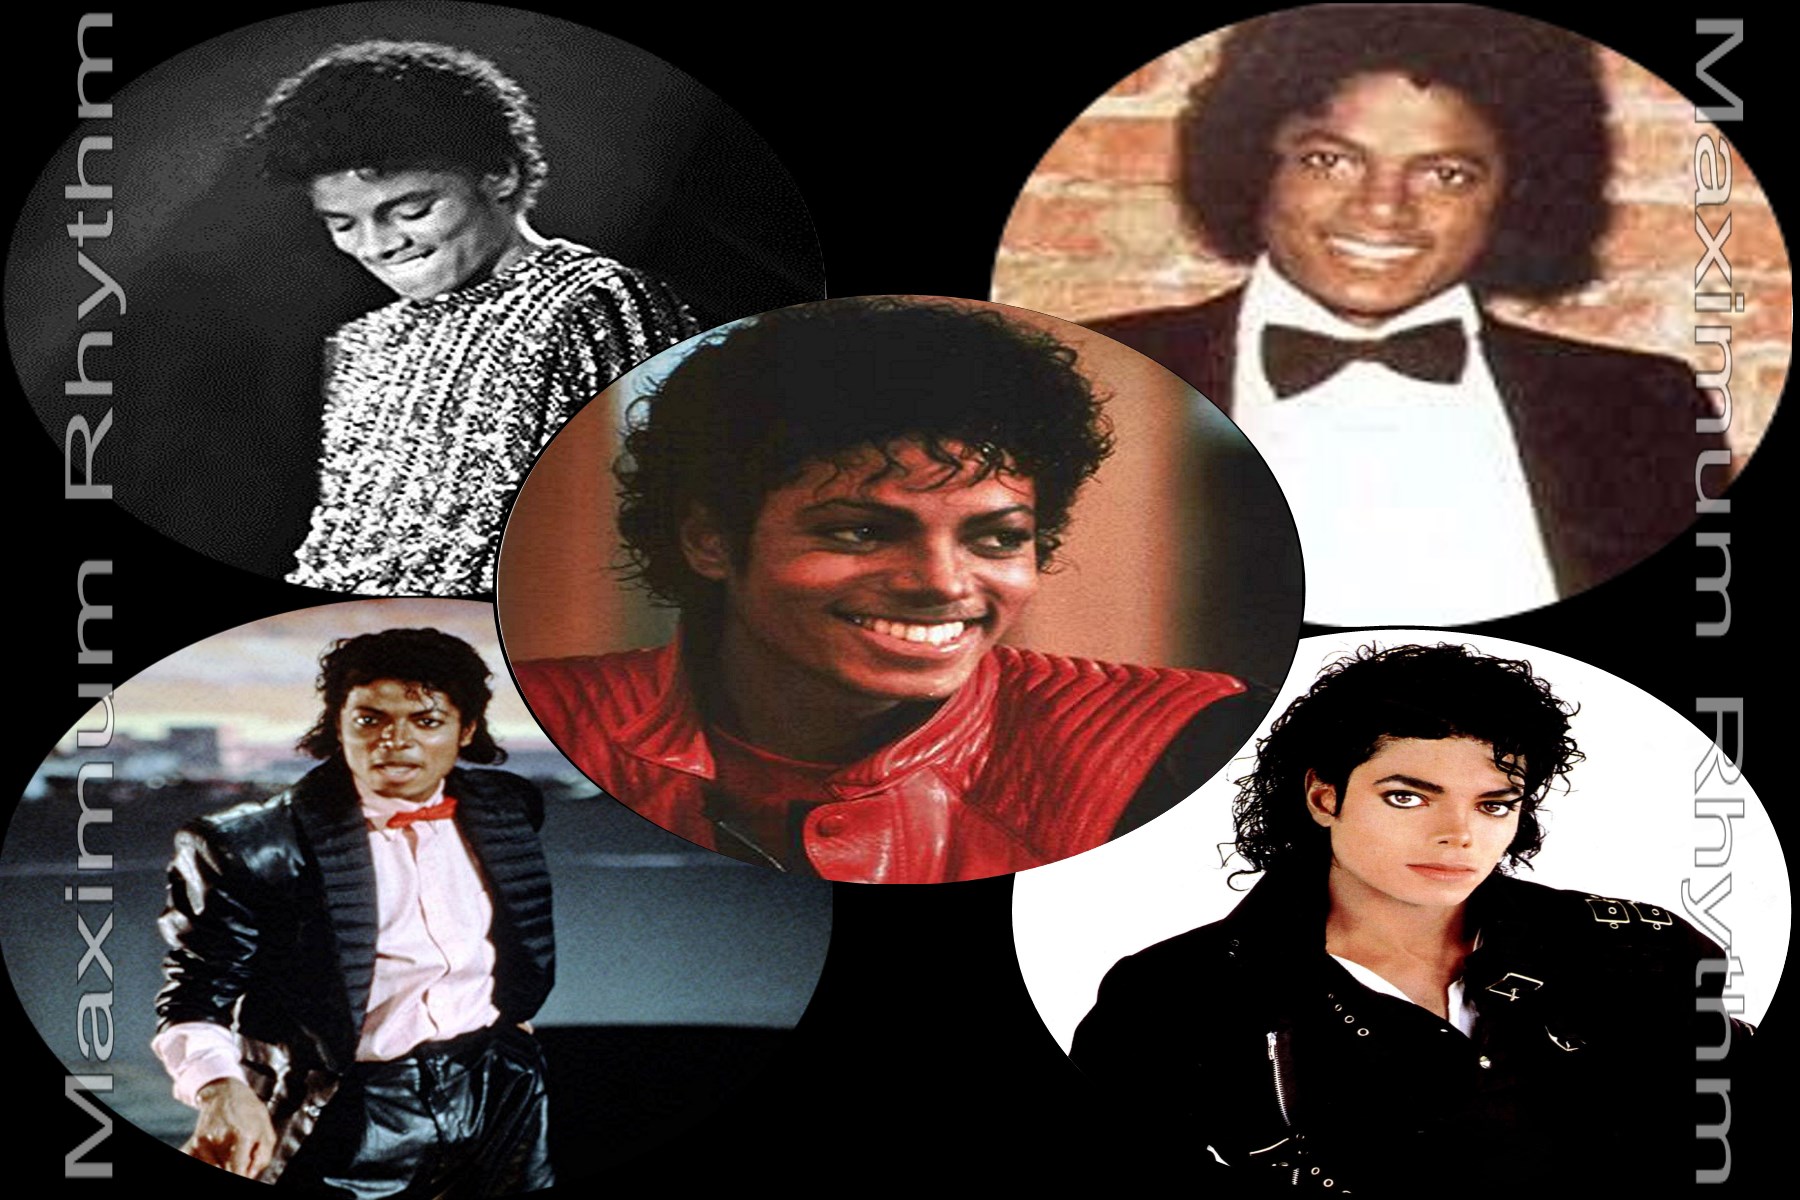 Michael Jackson v01D